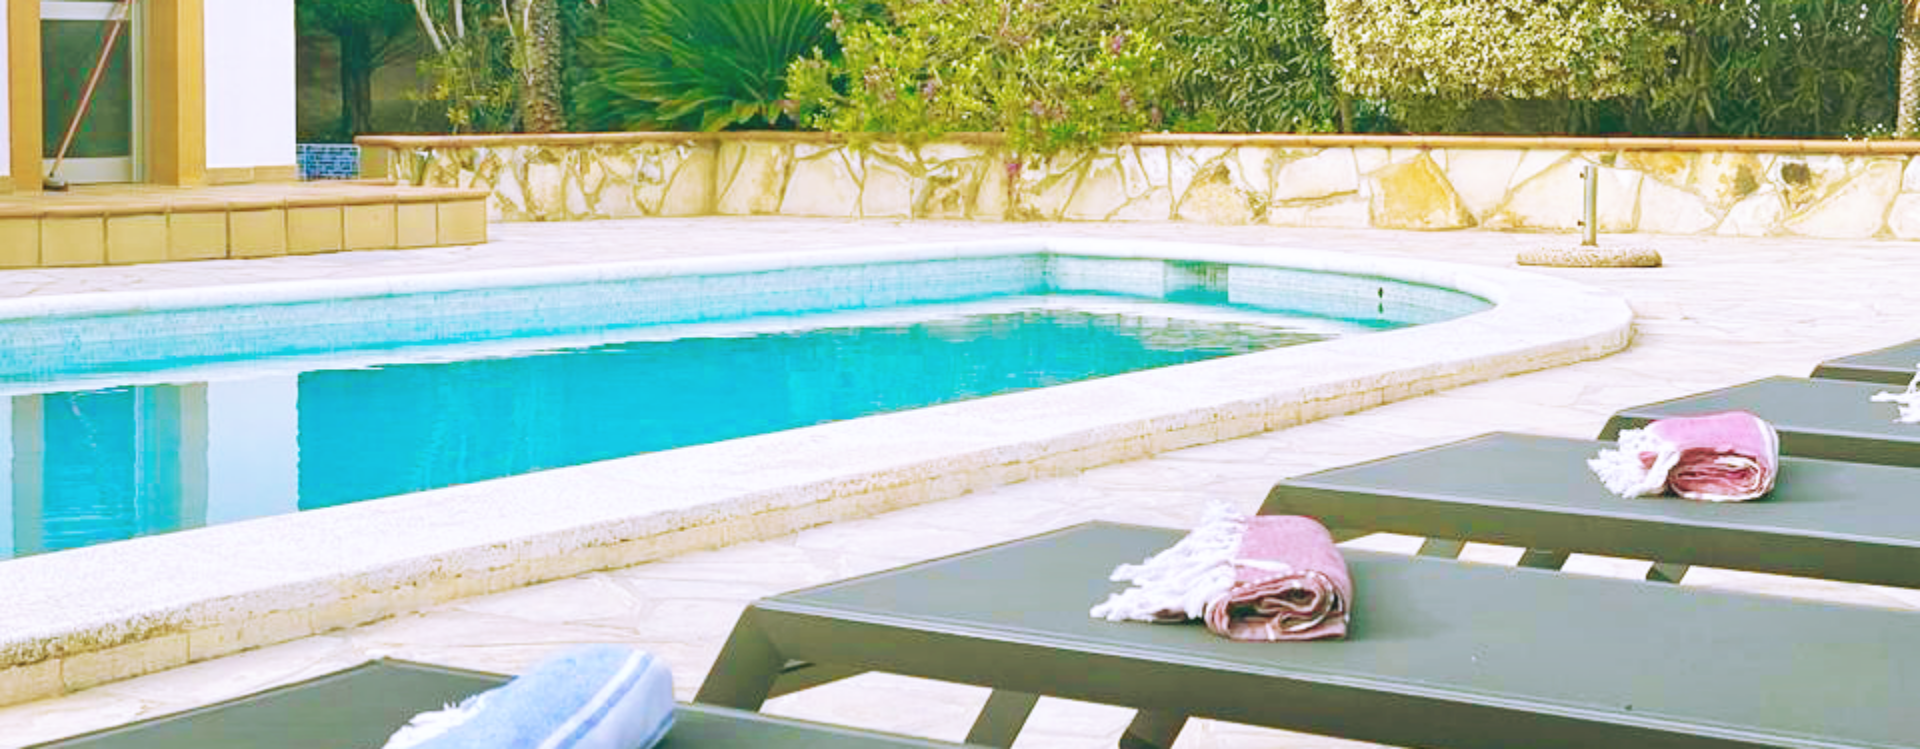 villa Linda te huur op Ibiza - zwembad